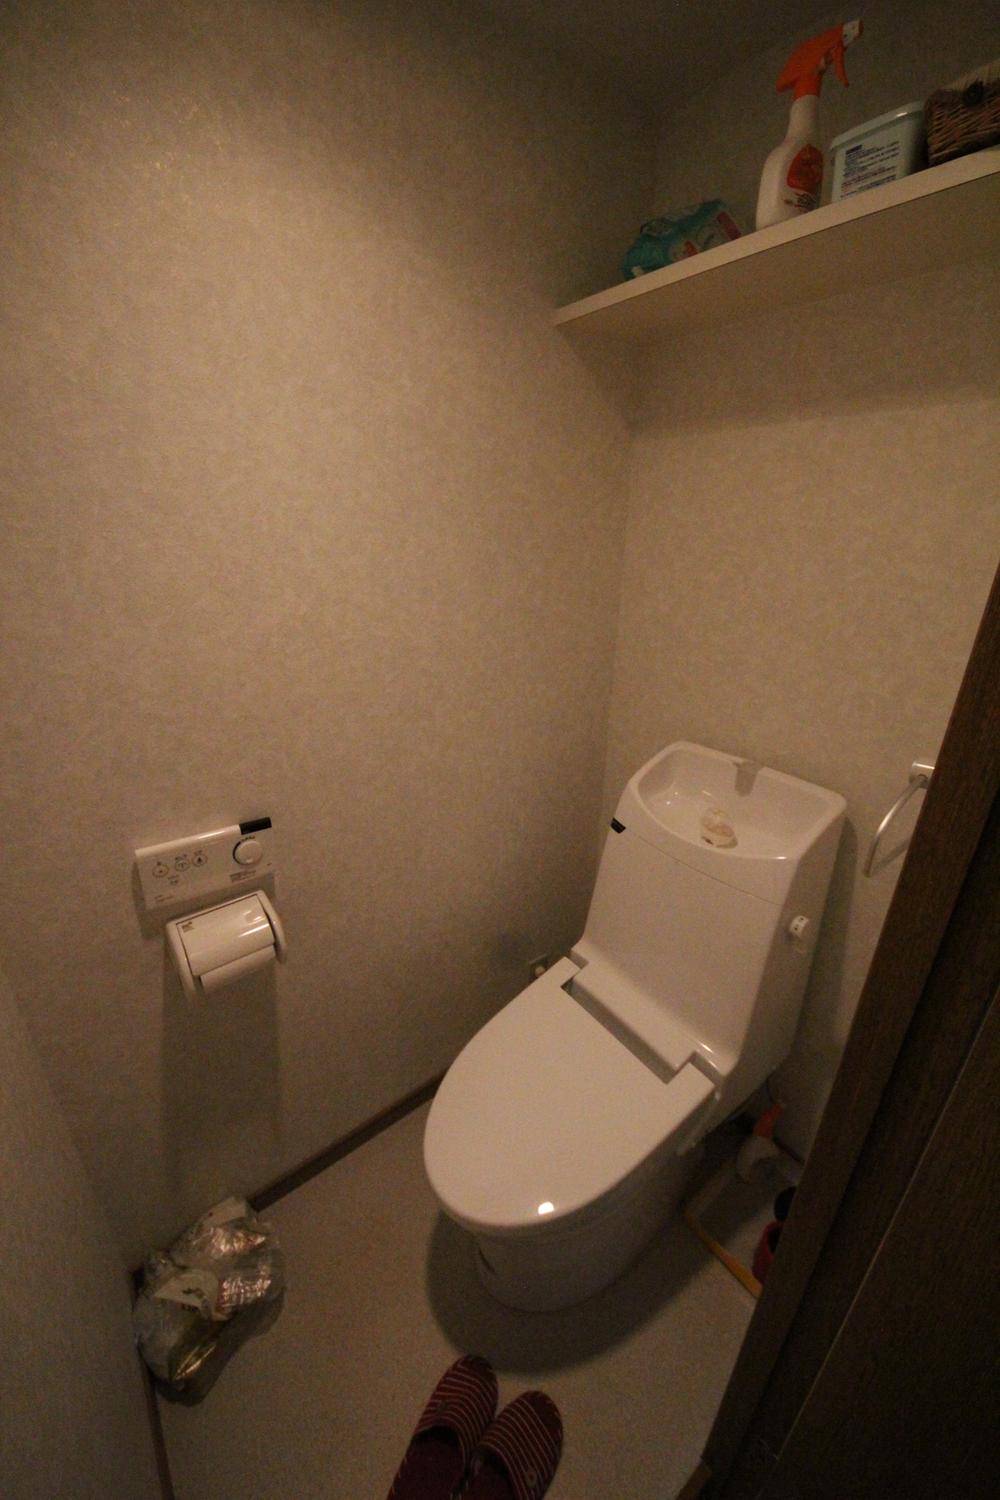 Toilet. (October 2013) Shooting